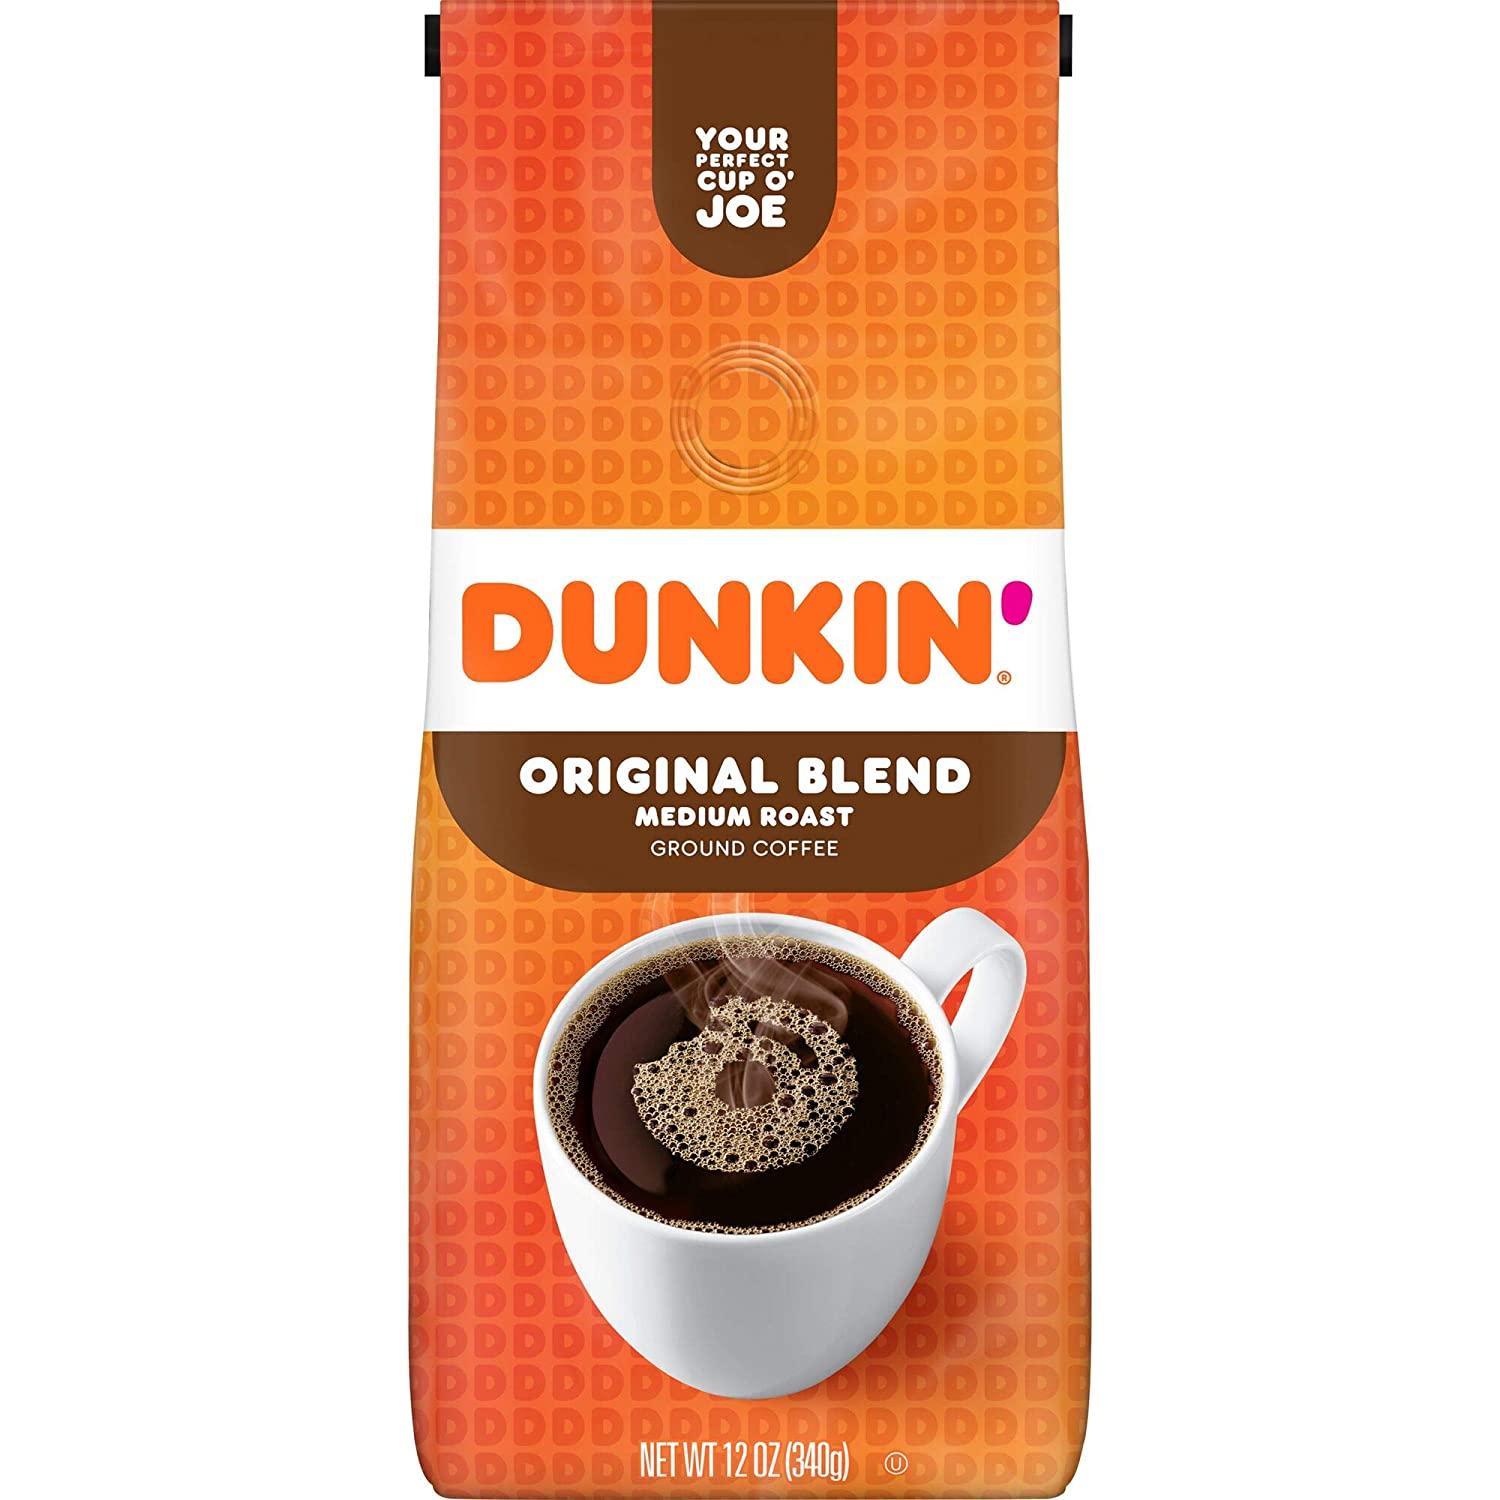 2x Dunkin Donuts Medium Roast Ground Coffee for $8.37 Shipped